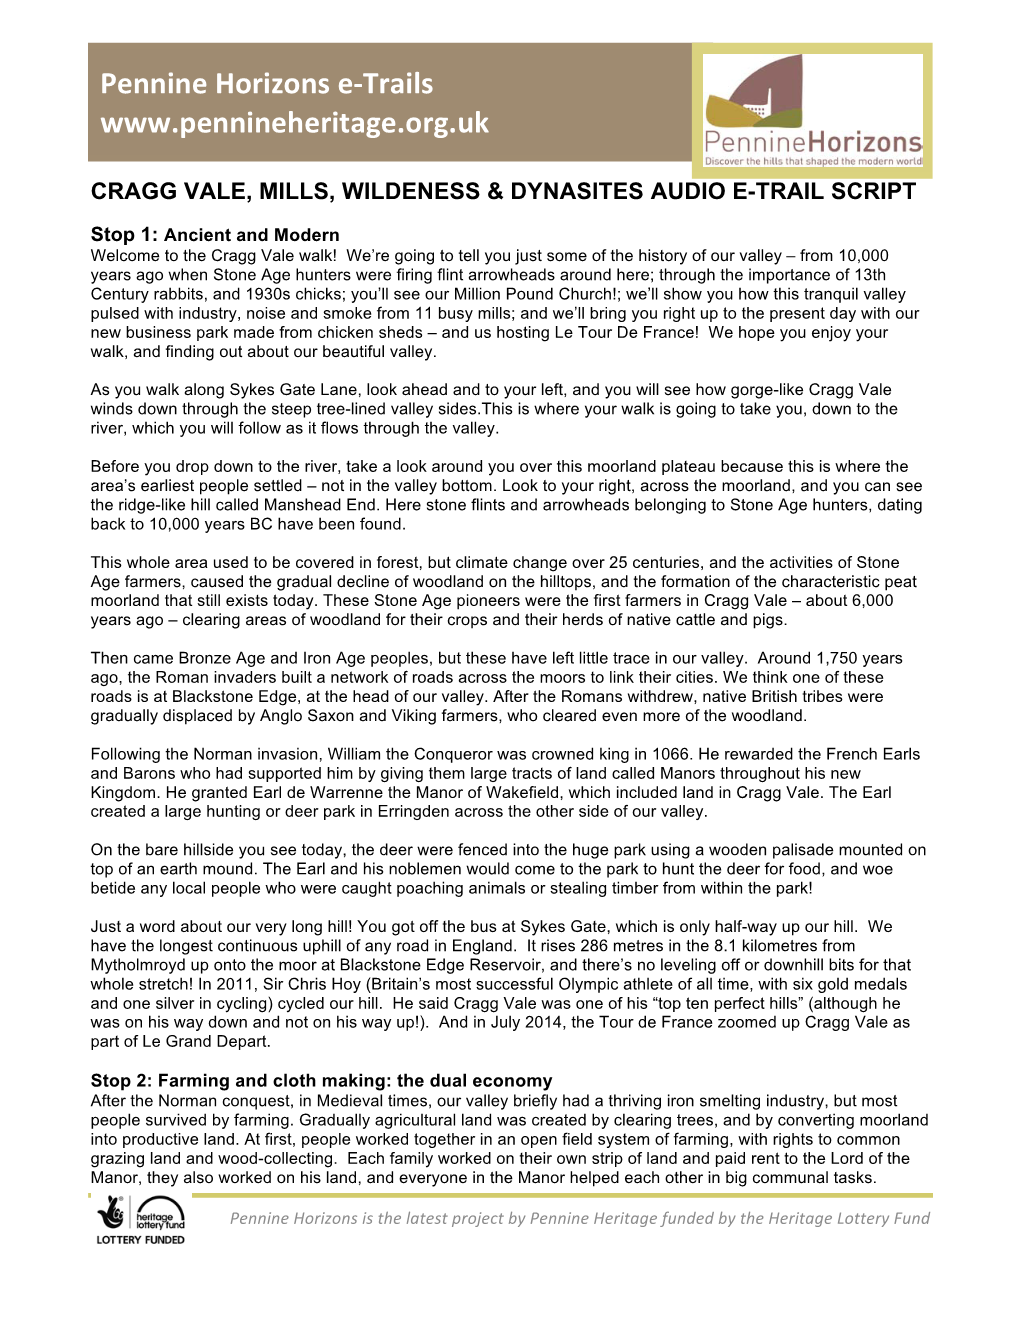 Cragg Vale, Mills, Wildeness & Dynasites Audio E-Trail Script